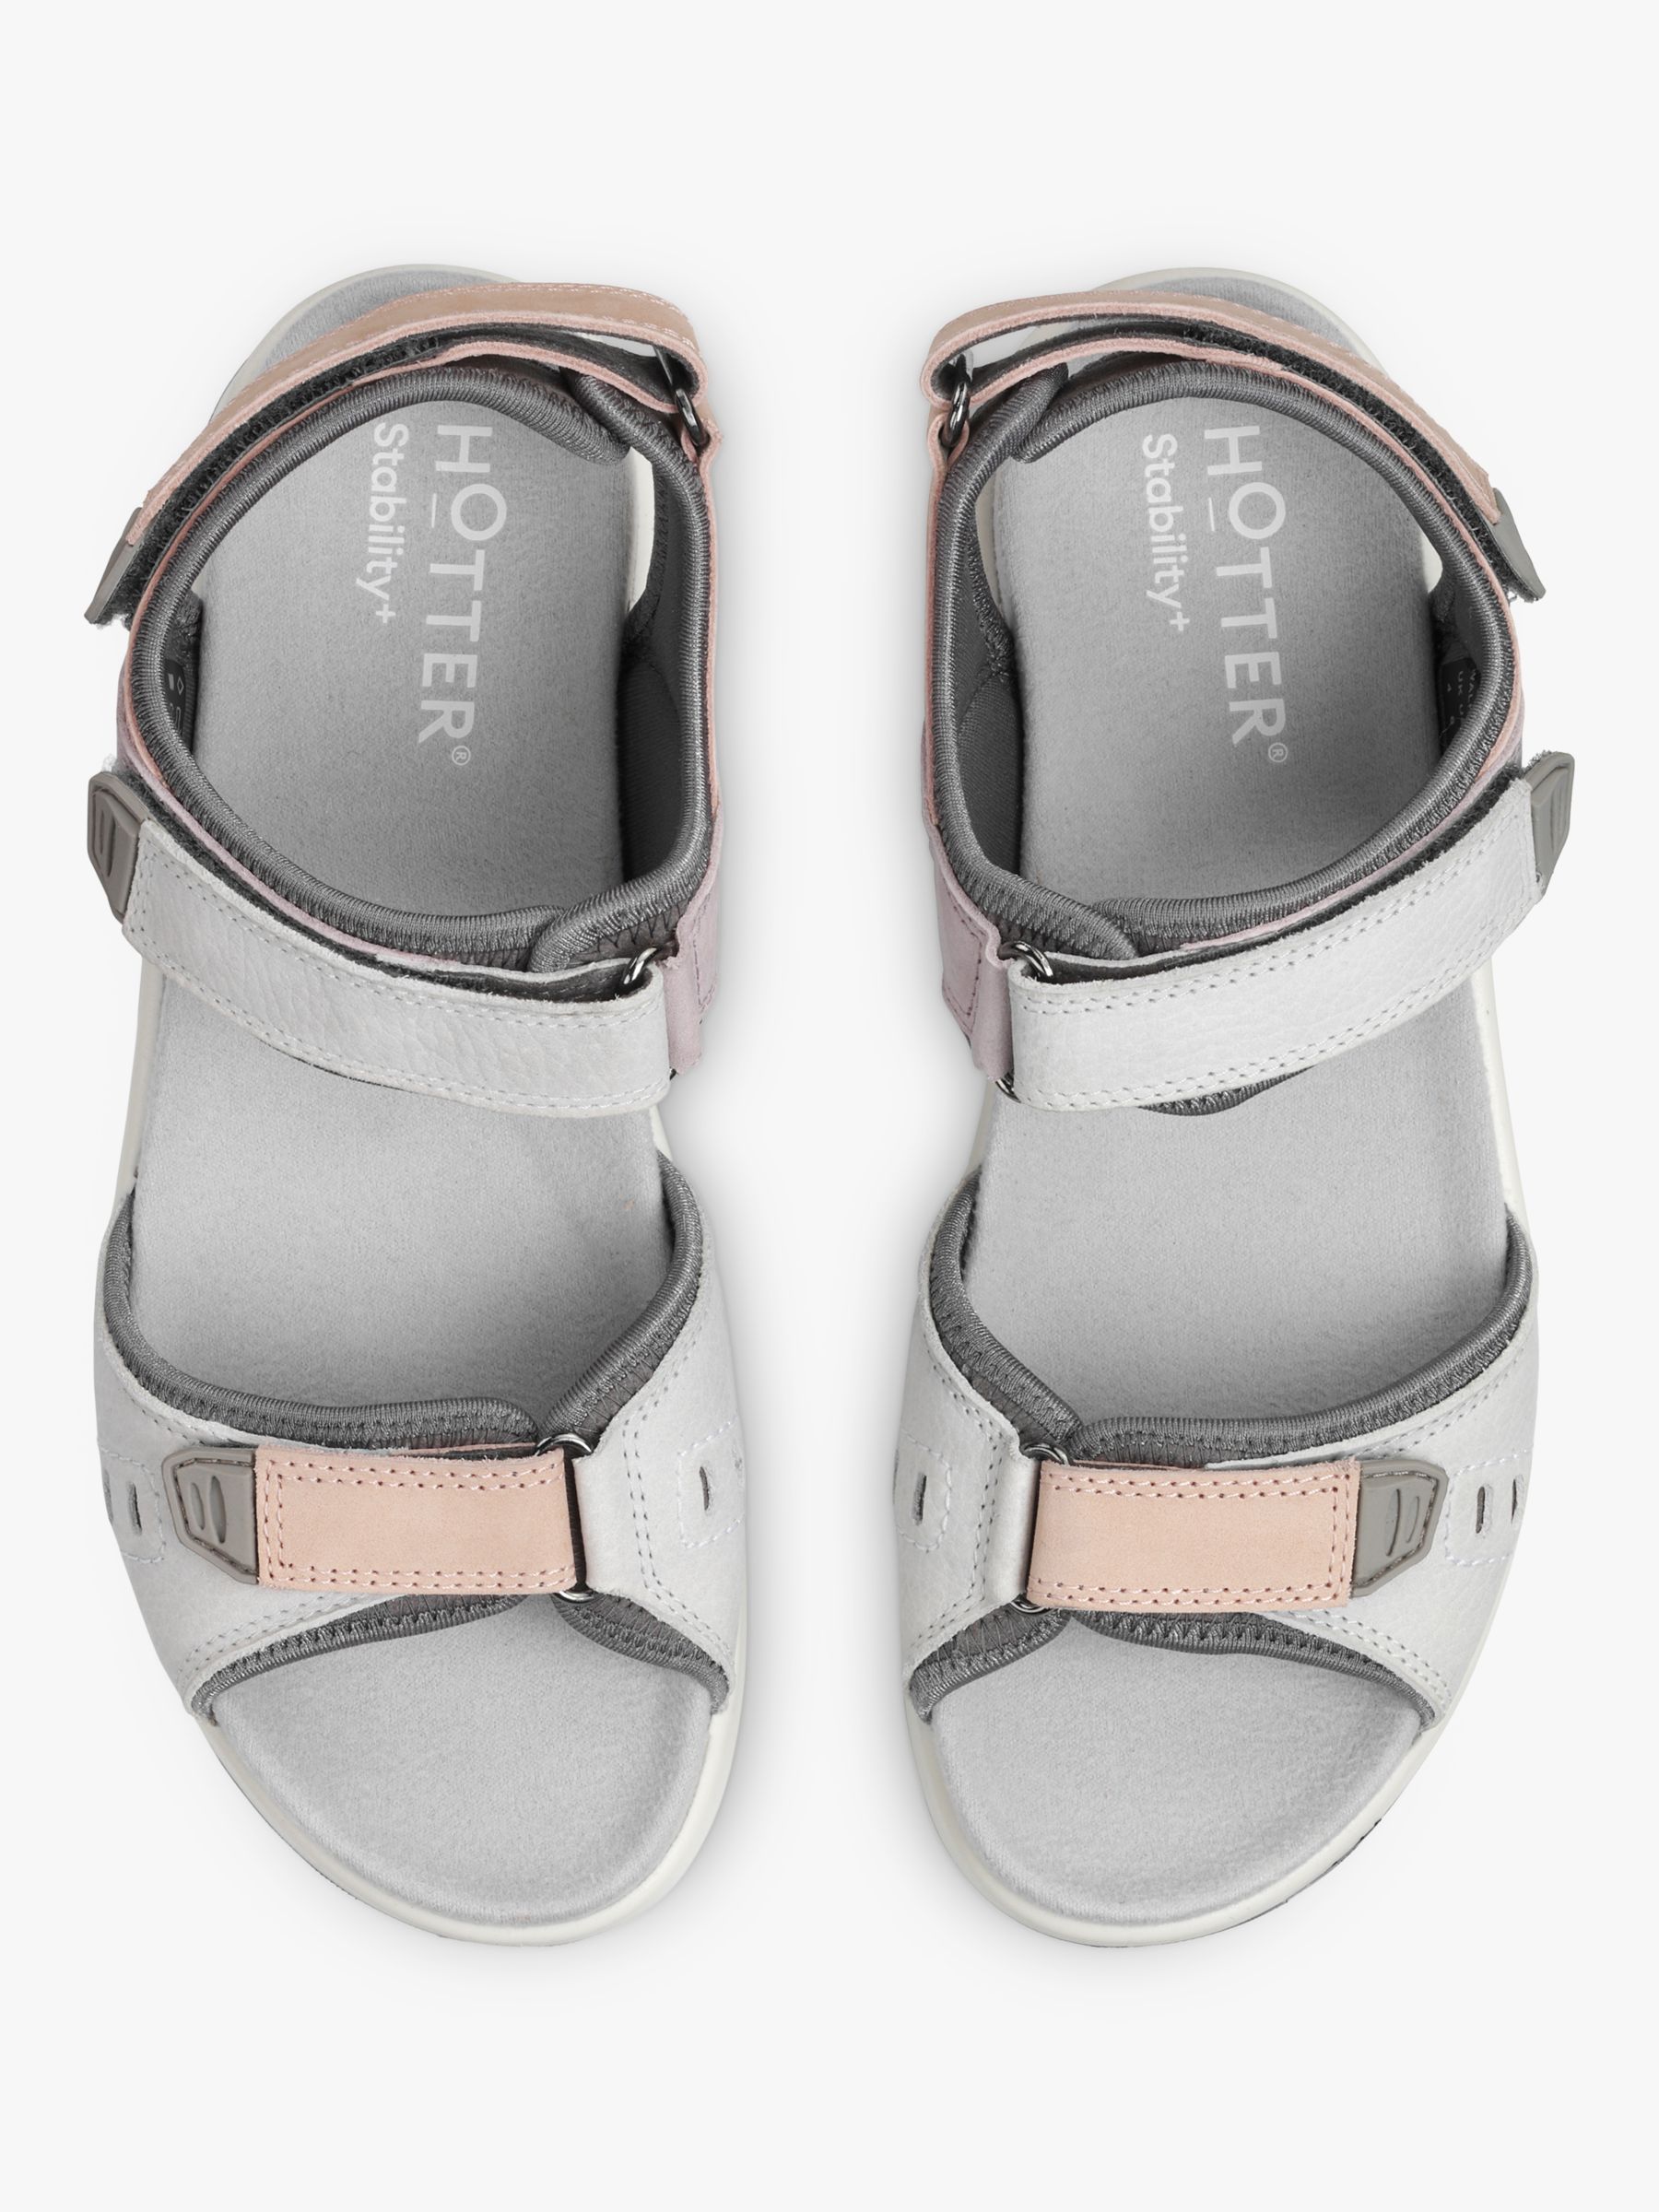 Buy Hotter Walk II Nubuck Lightweight Walking Sandals Online at johnlewis.com